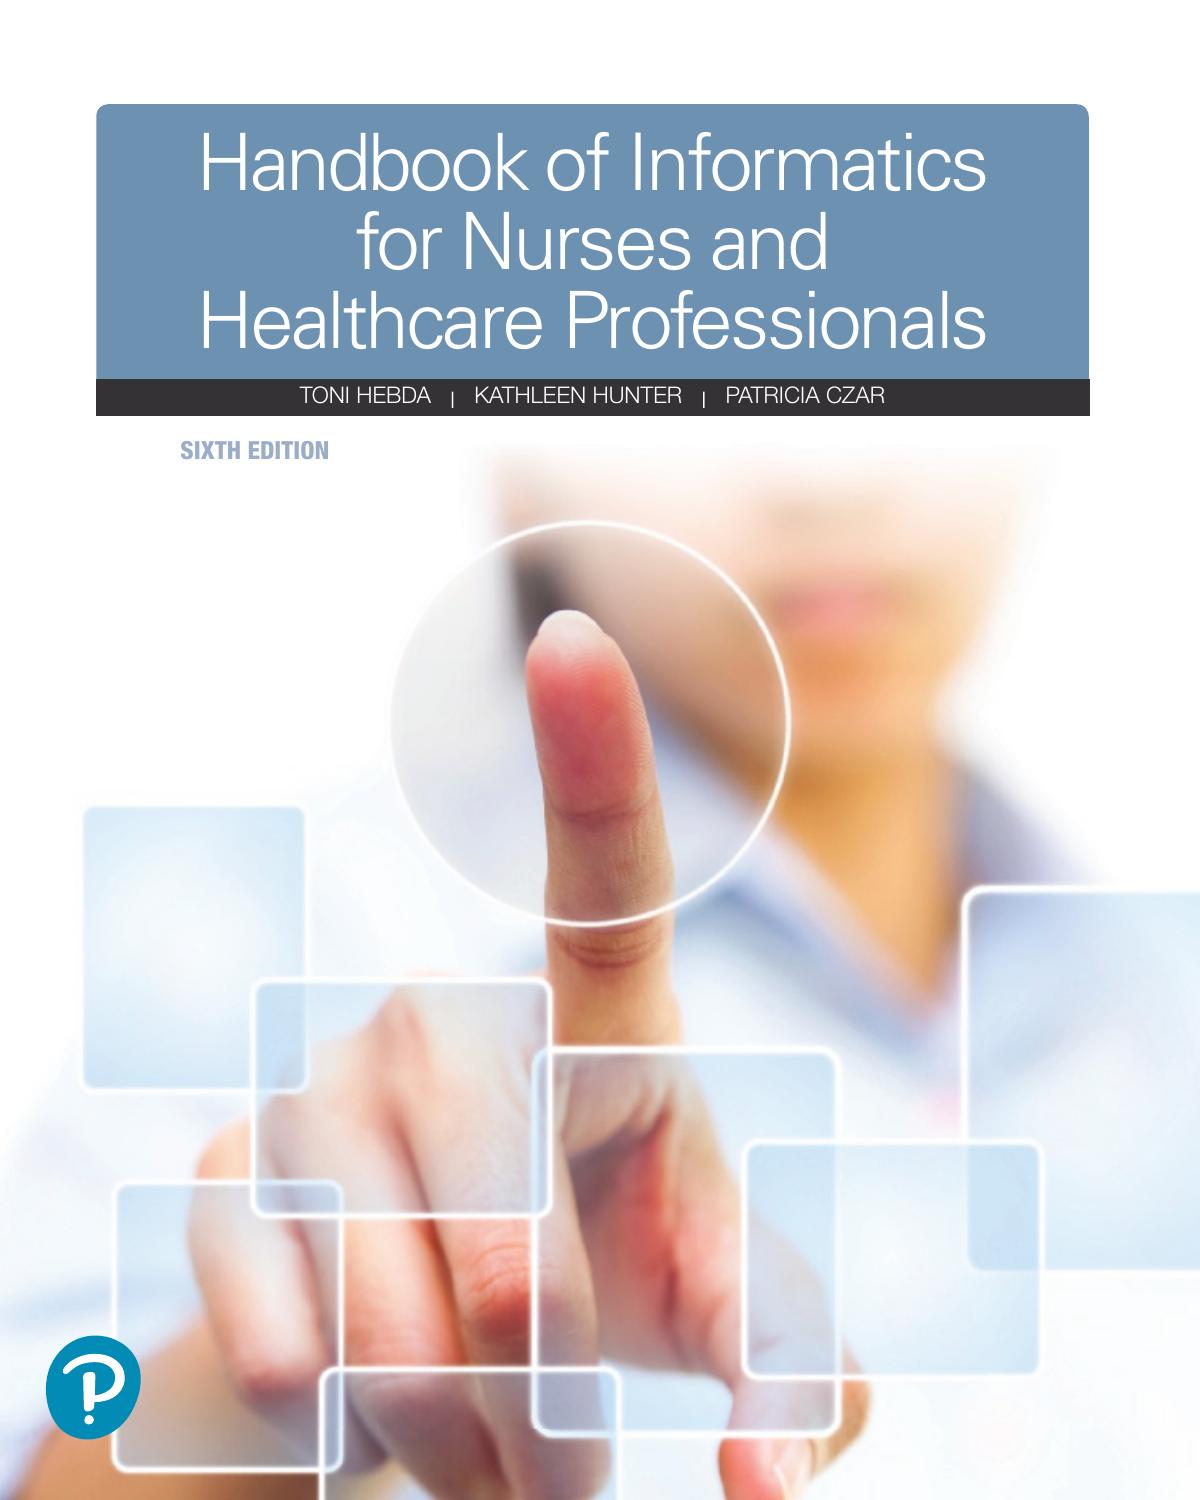 Handbook of Informatics for Nurses and Healthcare Professionals 6th Edition by Toni L. Hebda,Patricia Czar,Kathleen Hunter 